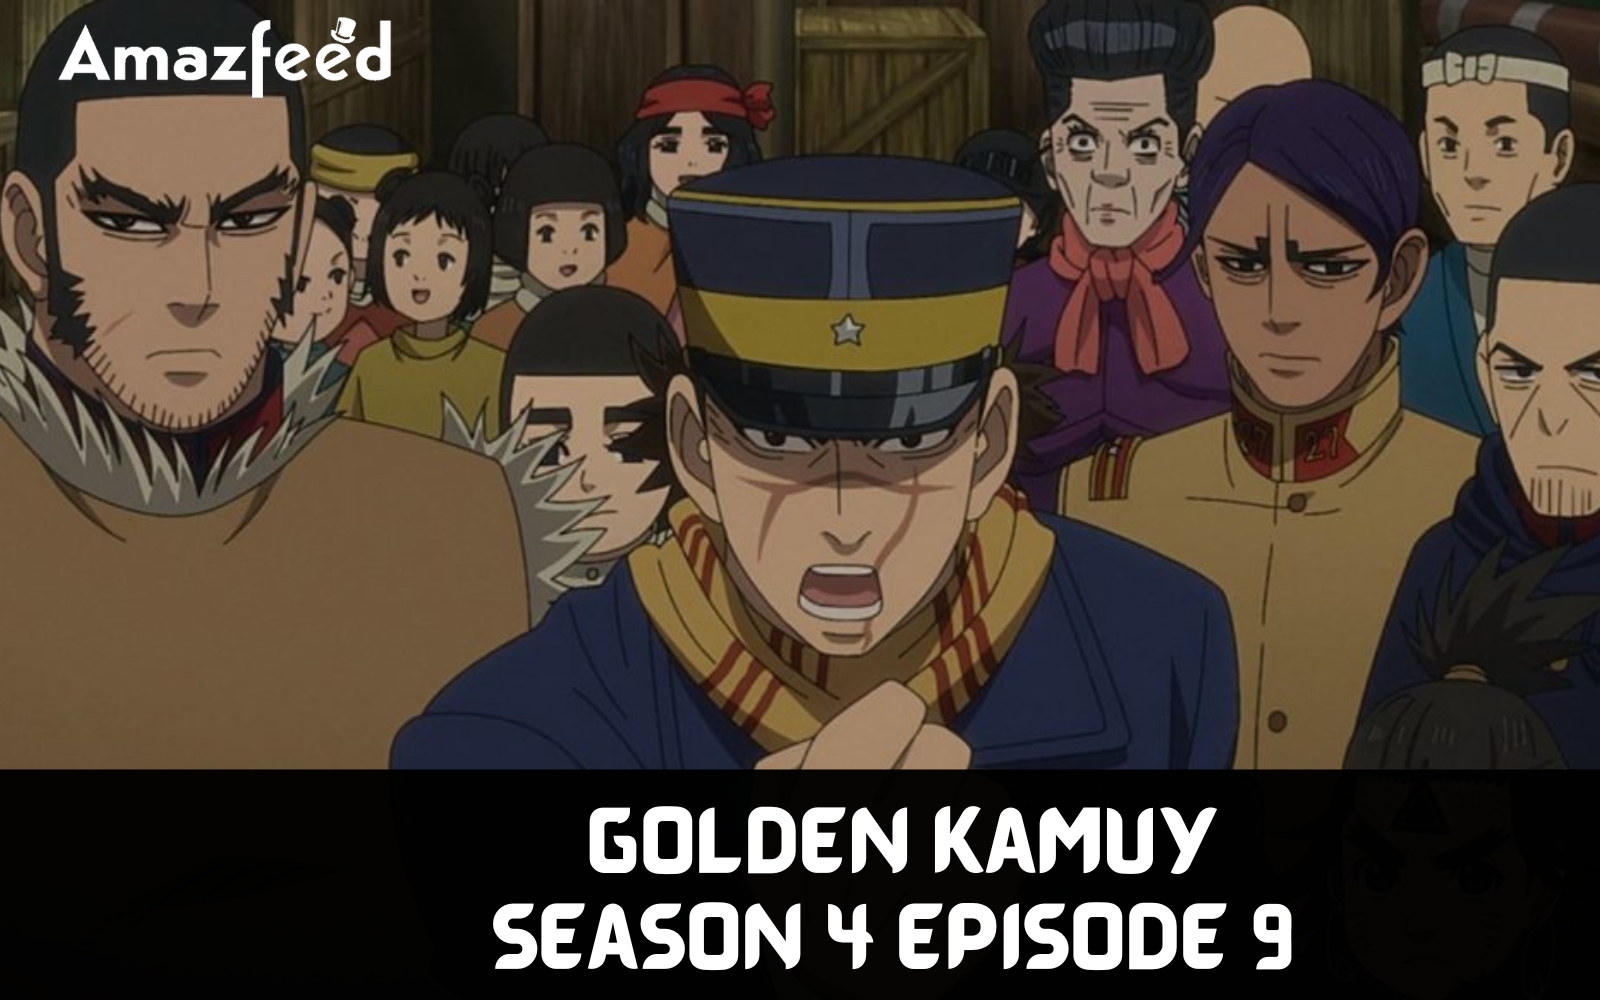 Golden Kamuy season 4 Episode 9